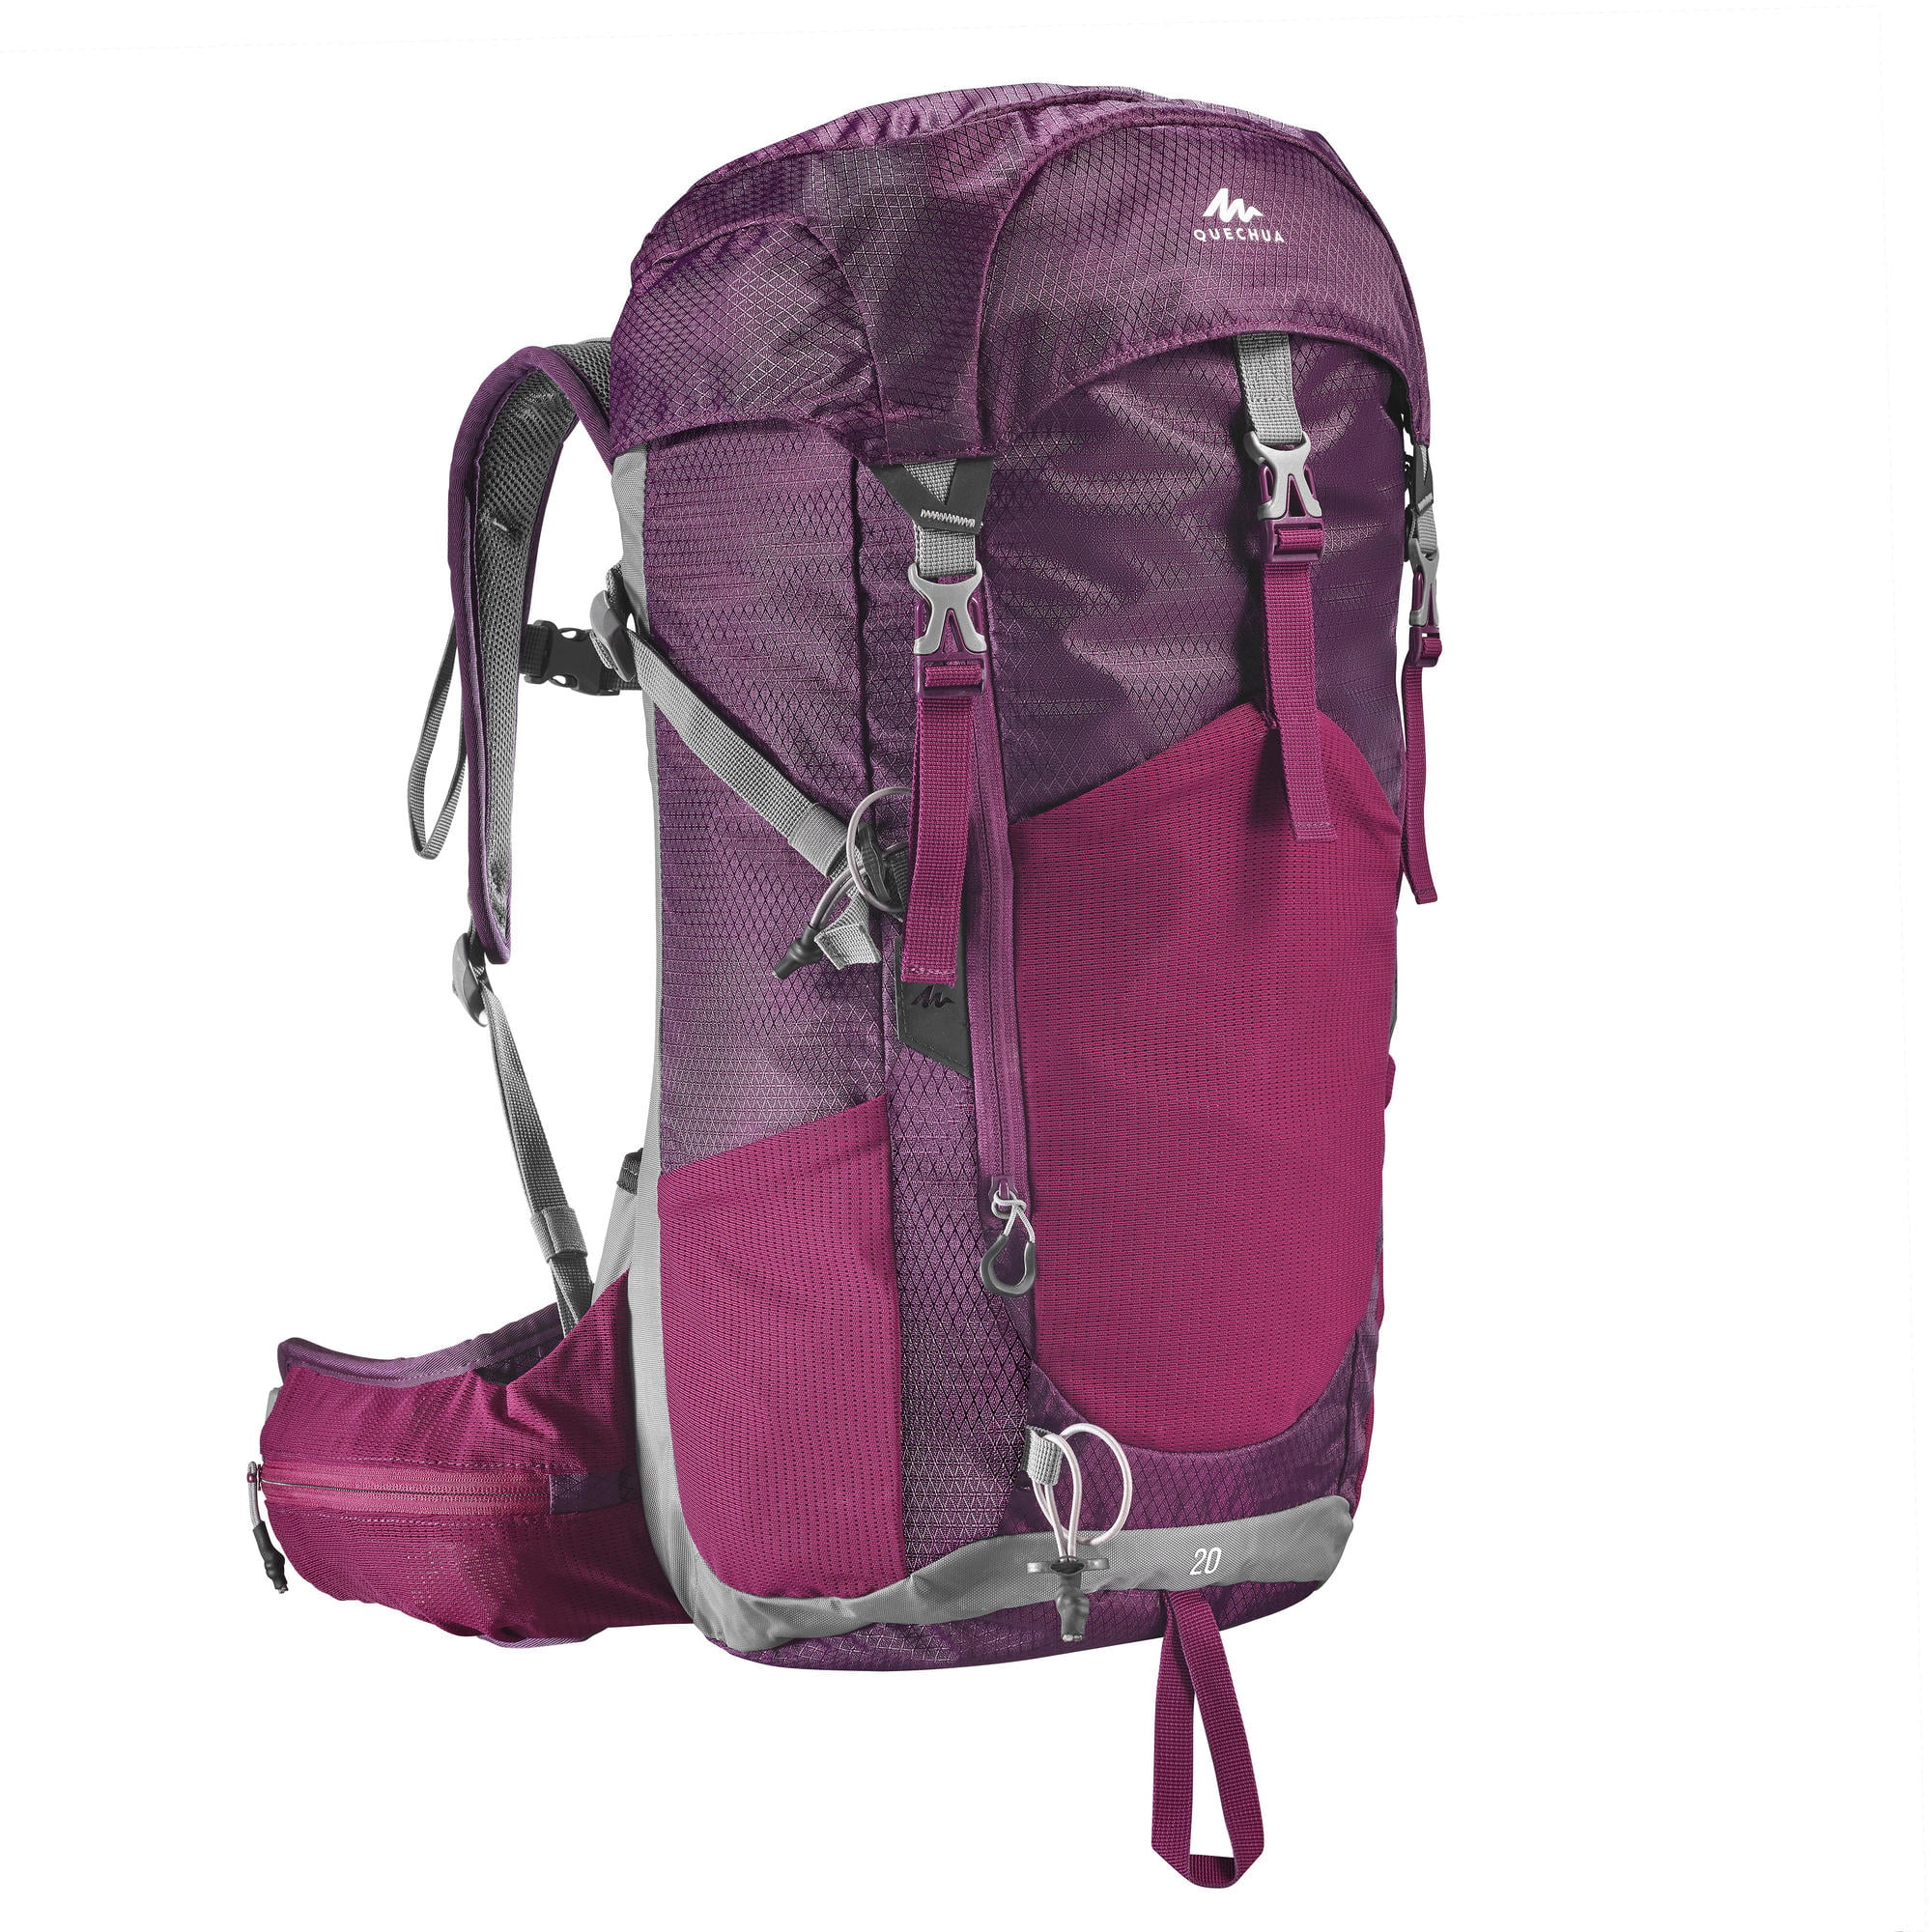 decathlon 80l backpack